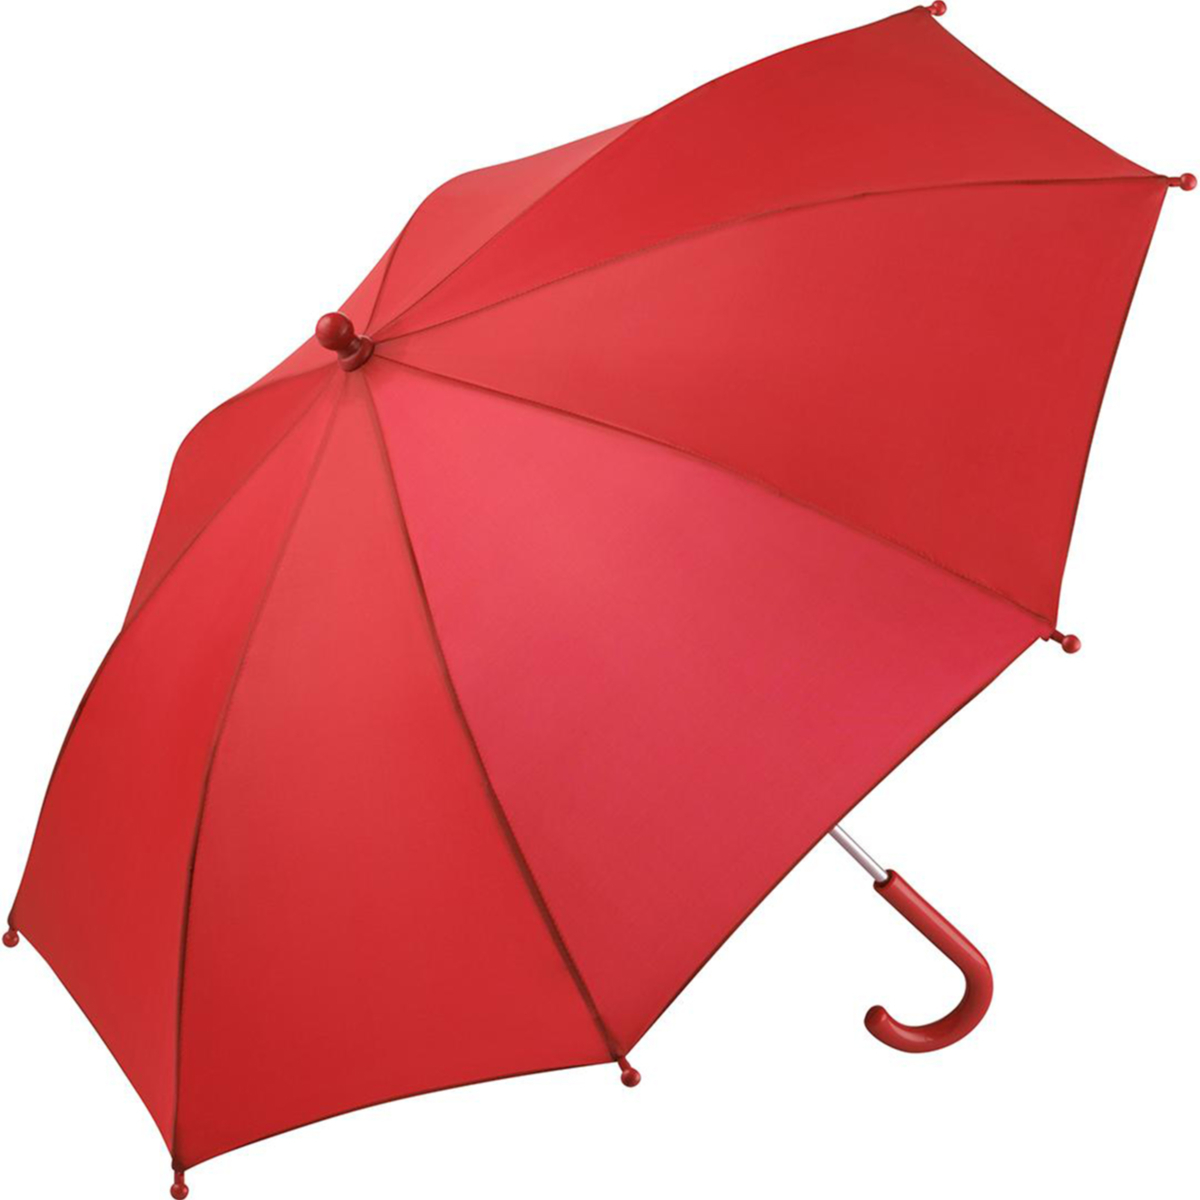 Performance Range Children's Walking Length Umbrella by Fare - Red